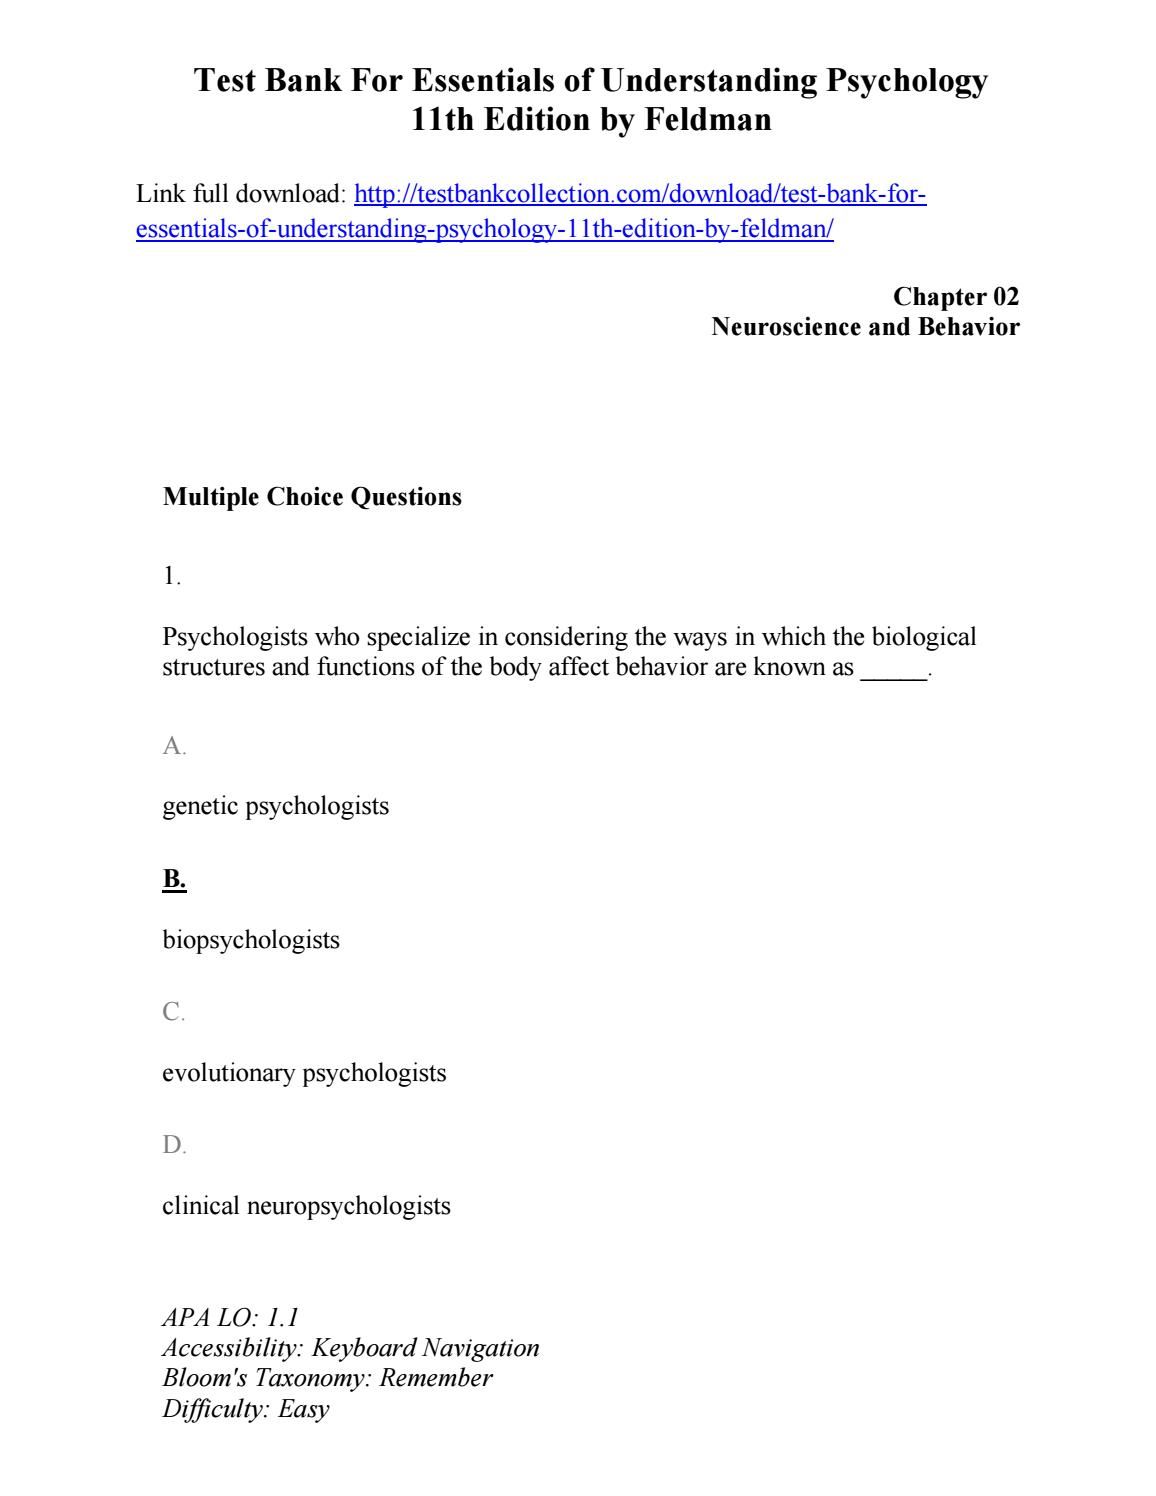 Understanding psychology by feldman free download pdf software